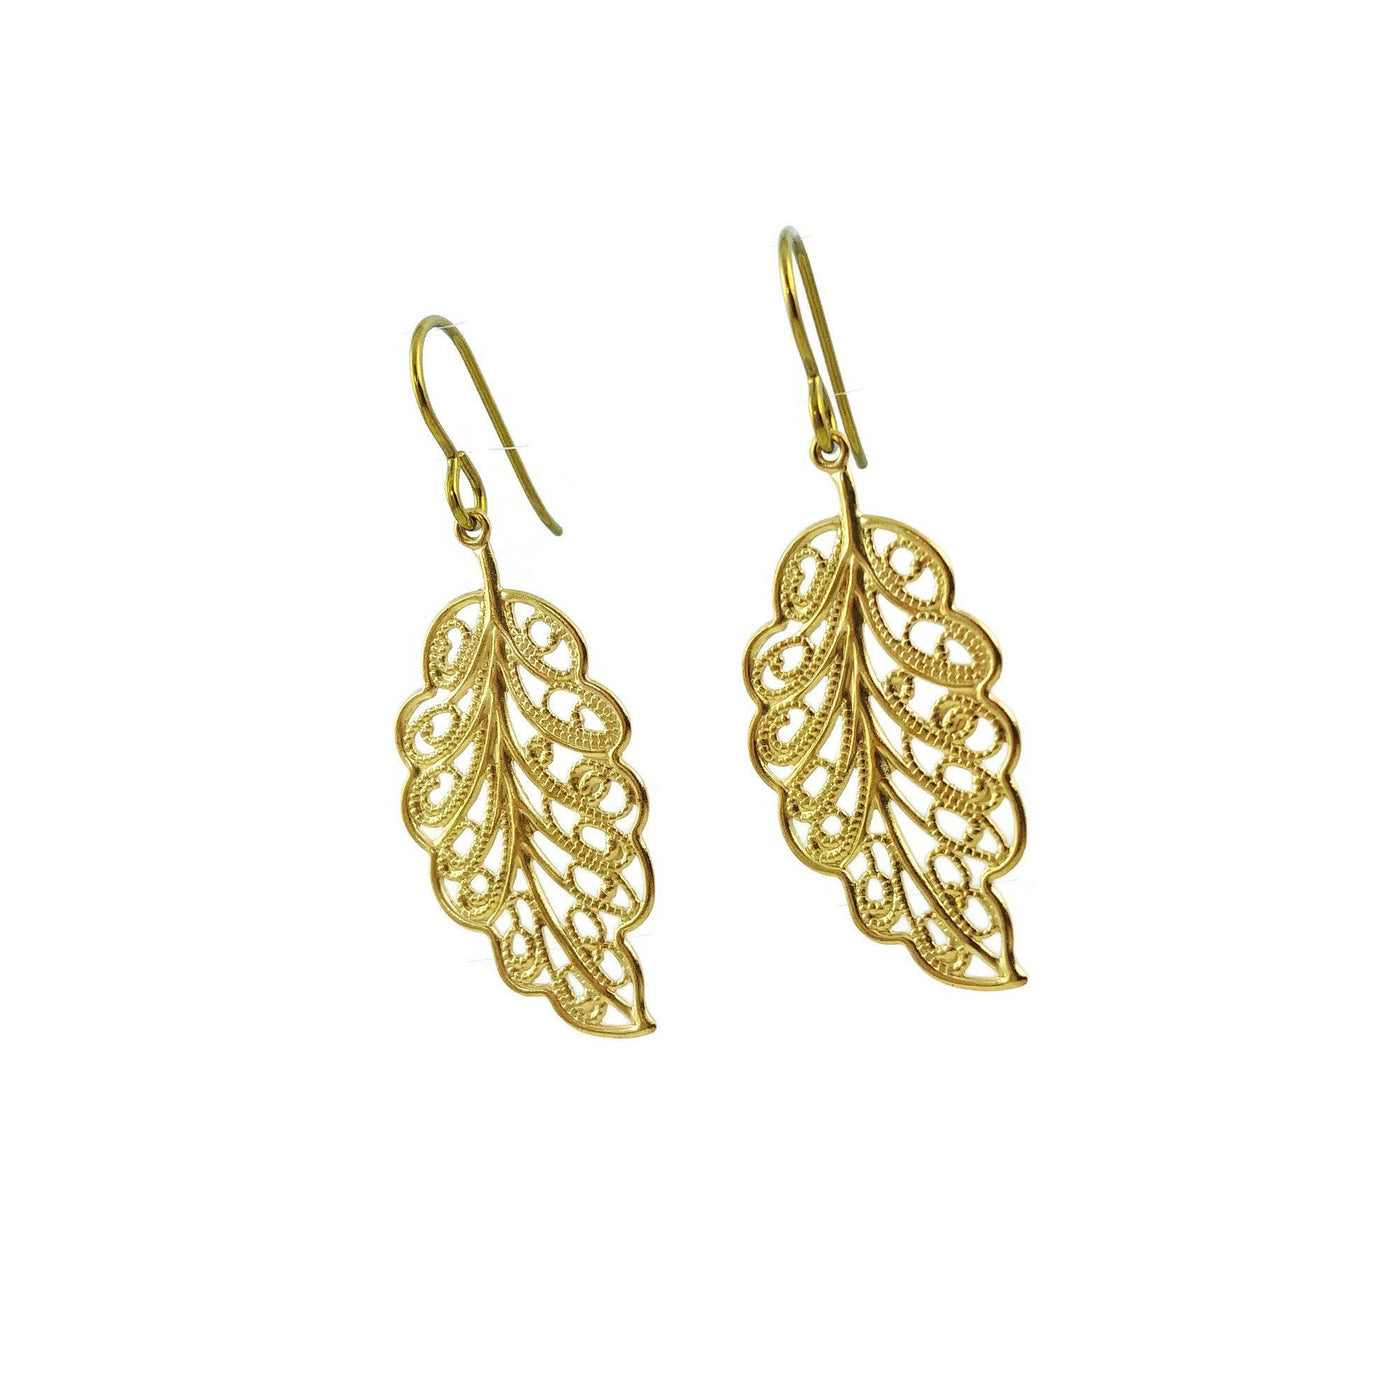 Gold filigree leaf dangle niobium earrings - Hypoallergenic nickel free, lead free and cadmium free